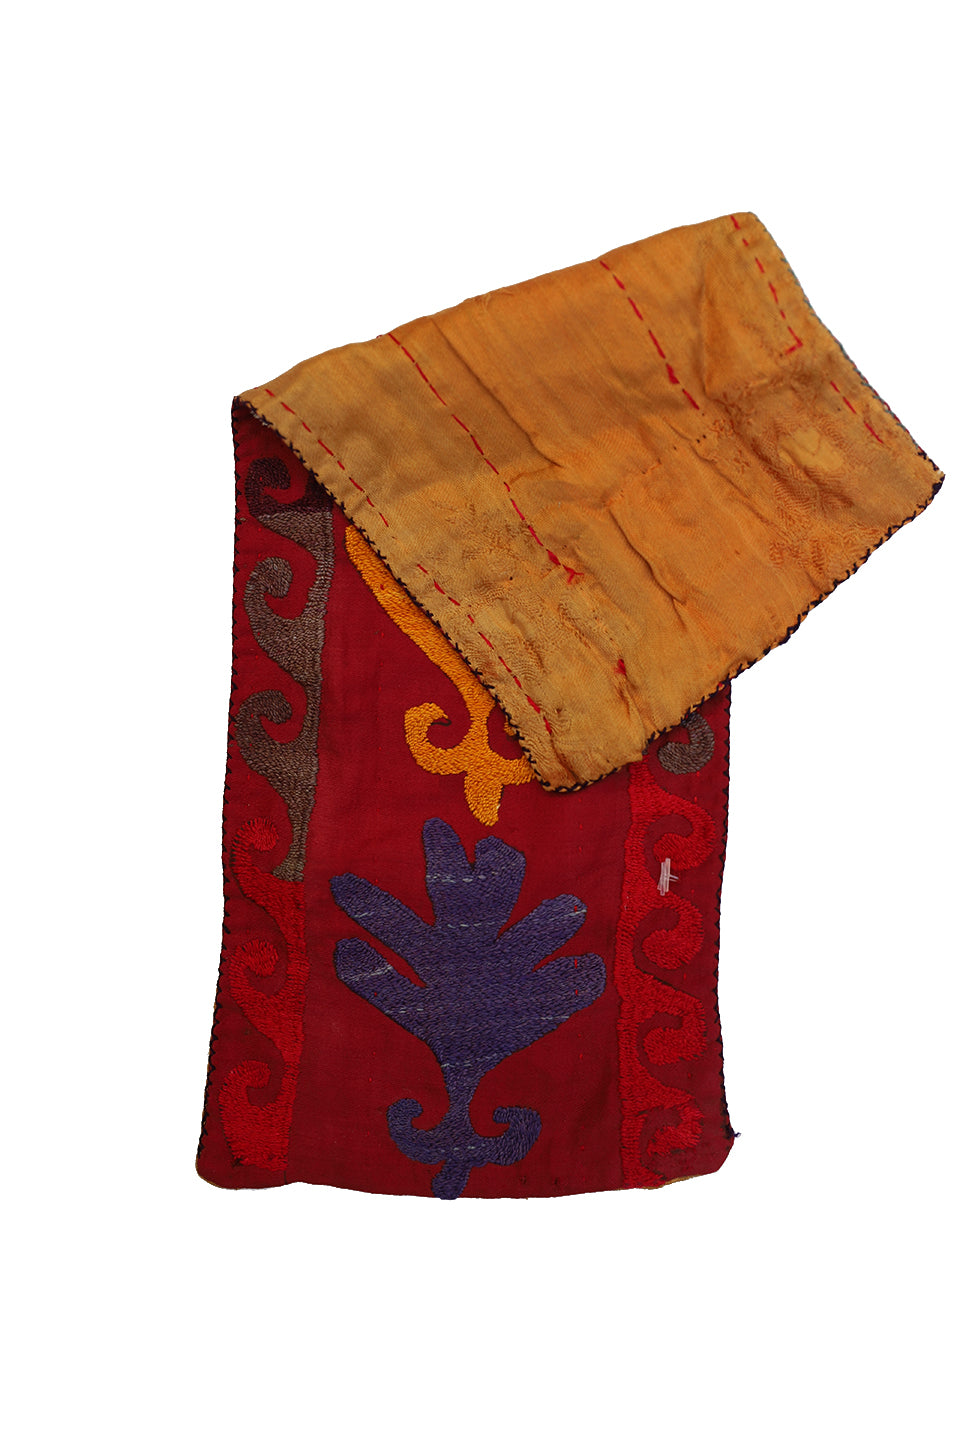 6"x16" Small decorative Uzbek Suzani Embroidery Textile